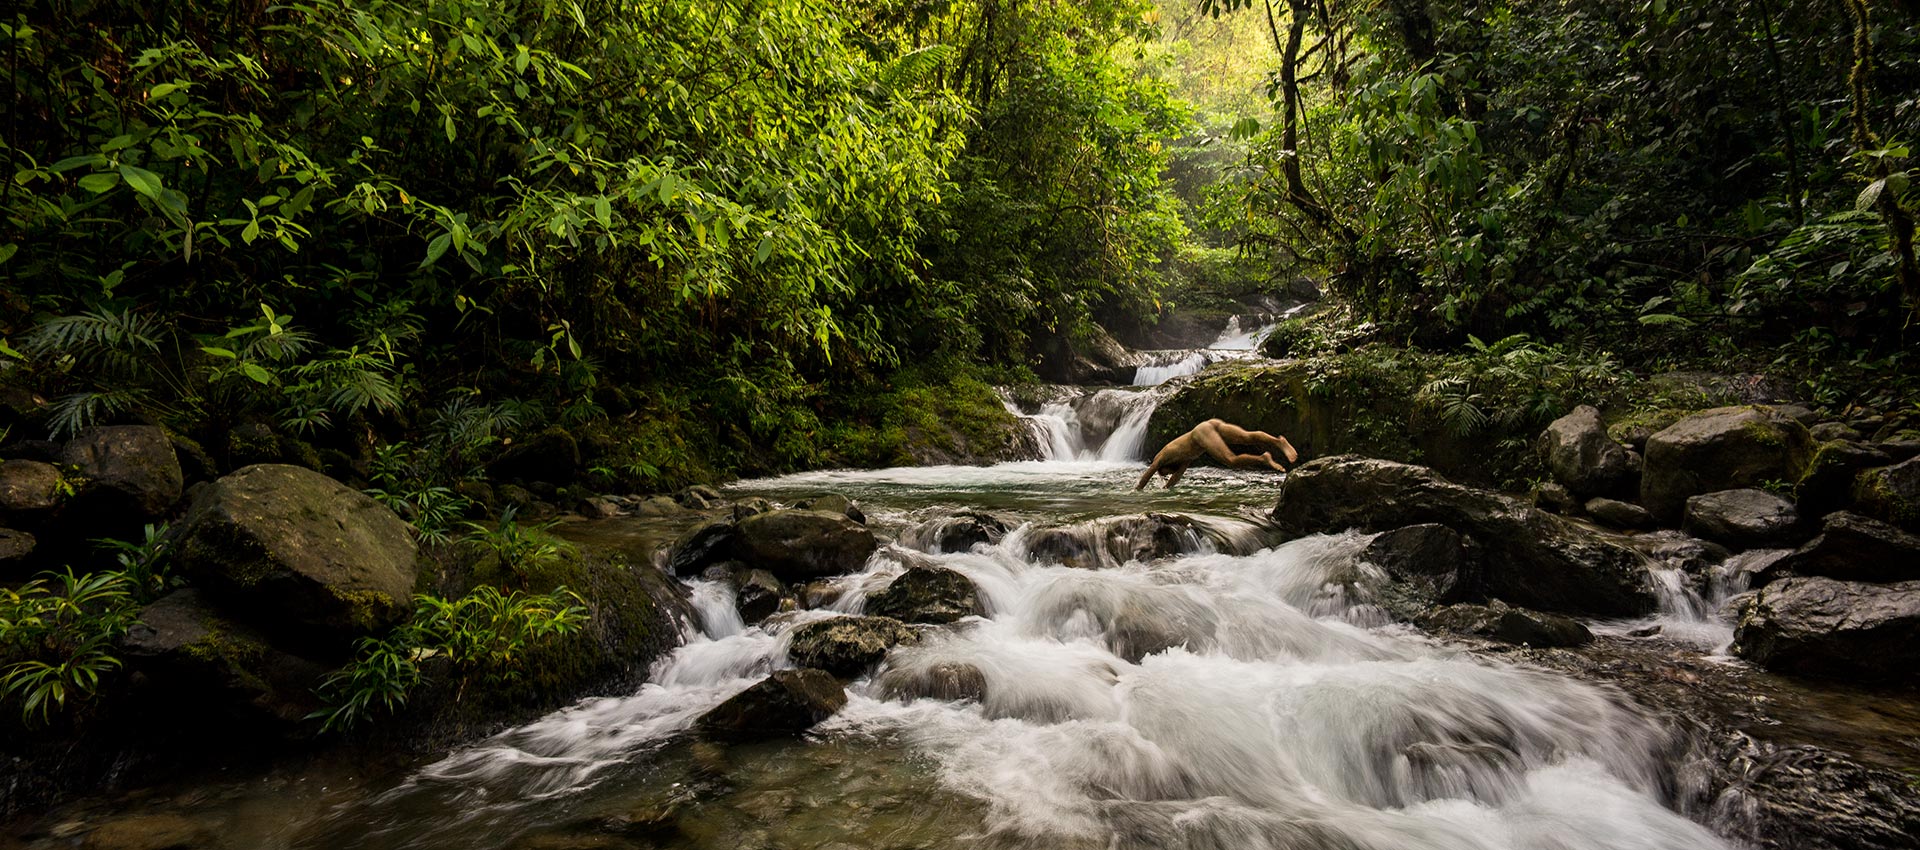 Chocó Rainforest, Colombia